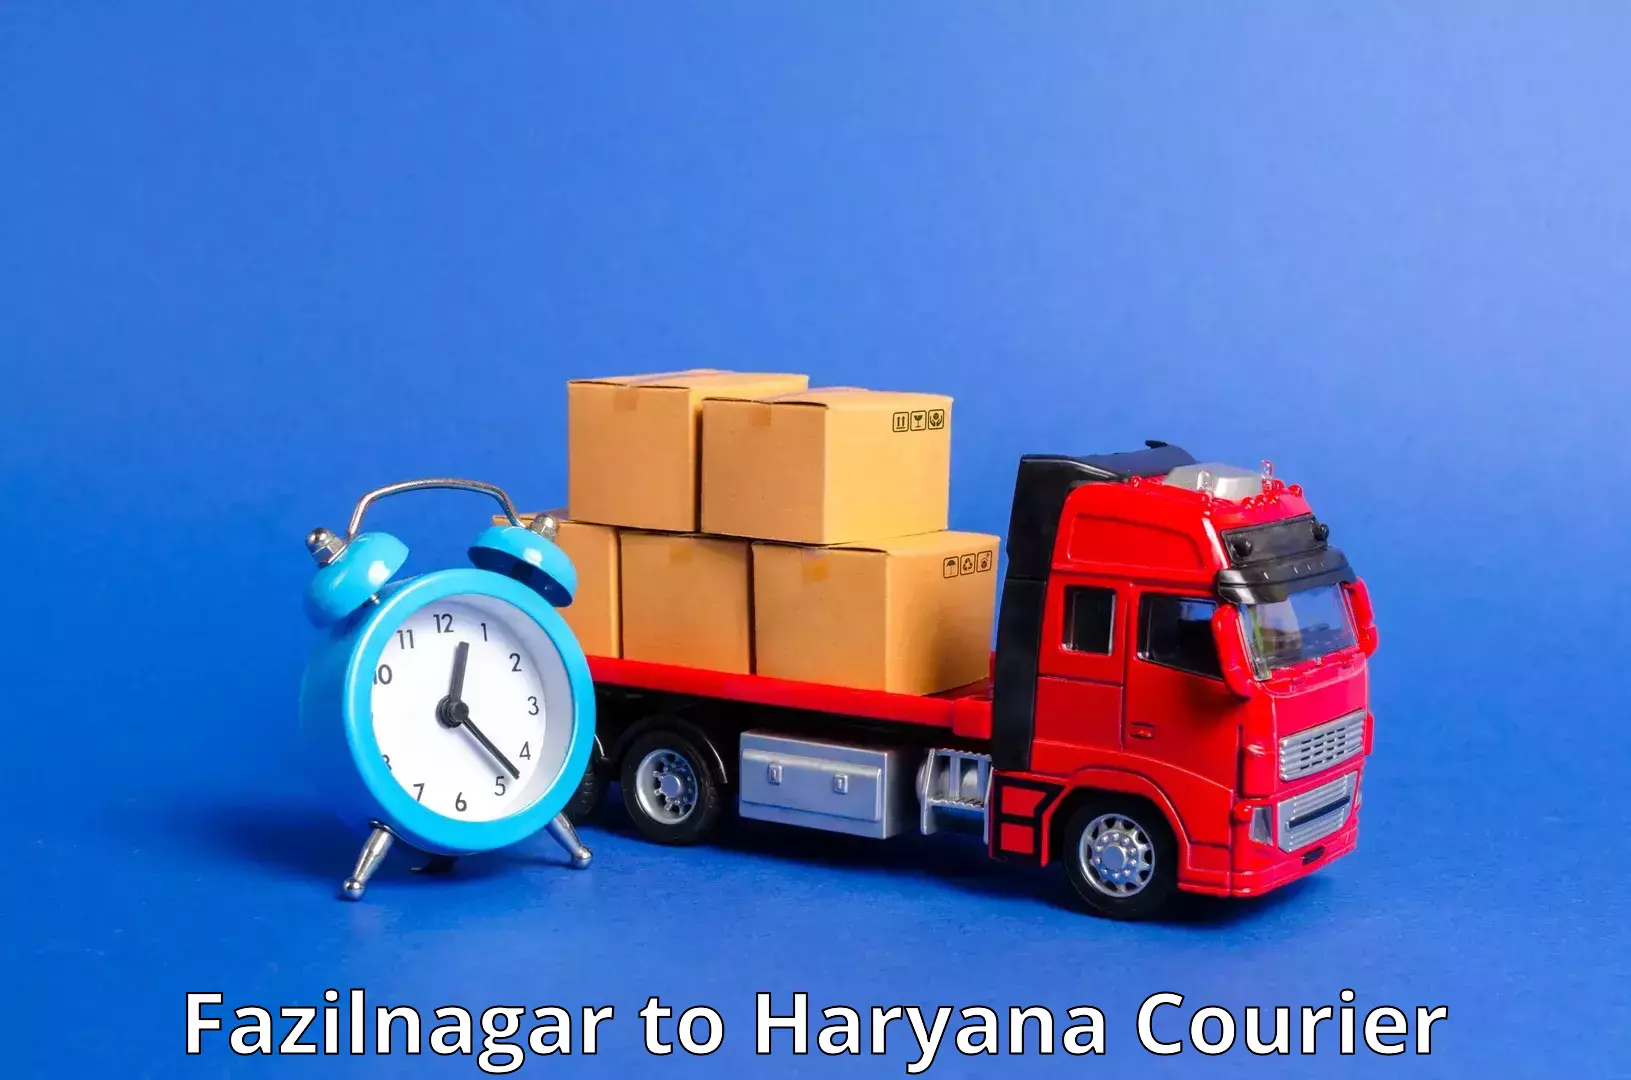 Courier service comparison Fazilnagar to Rohtak